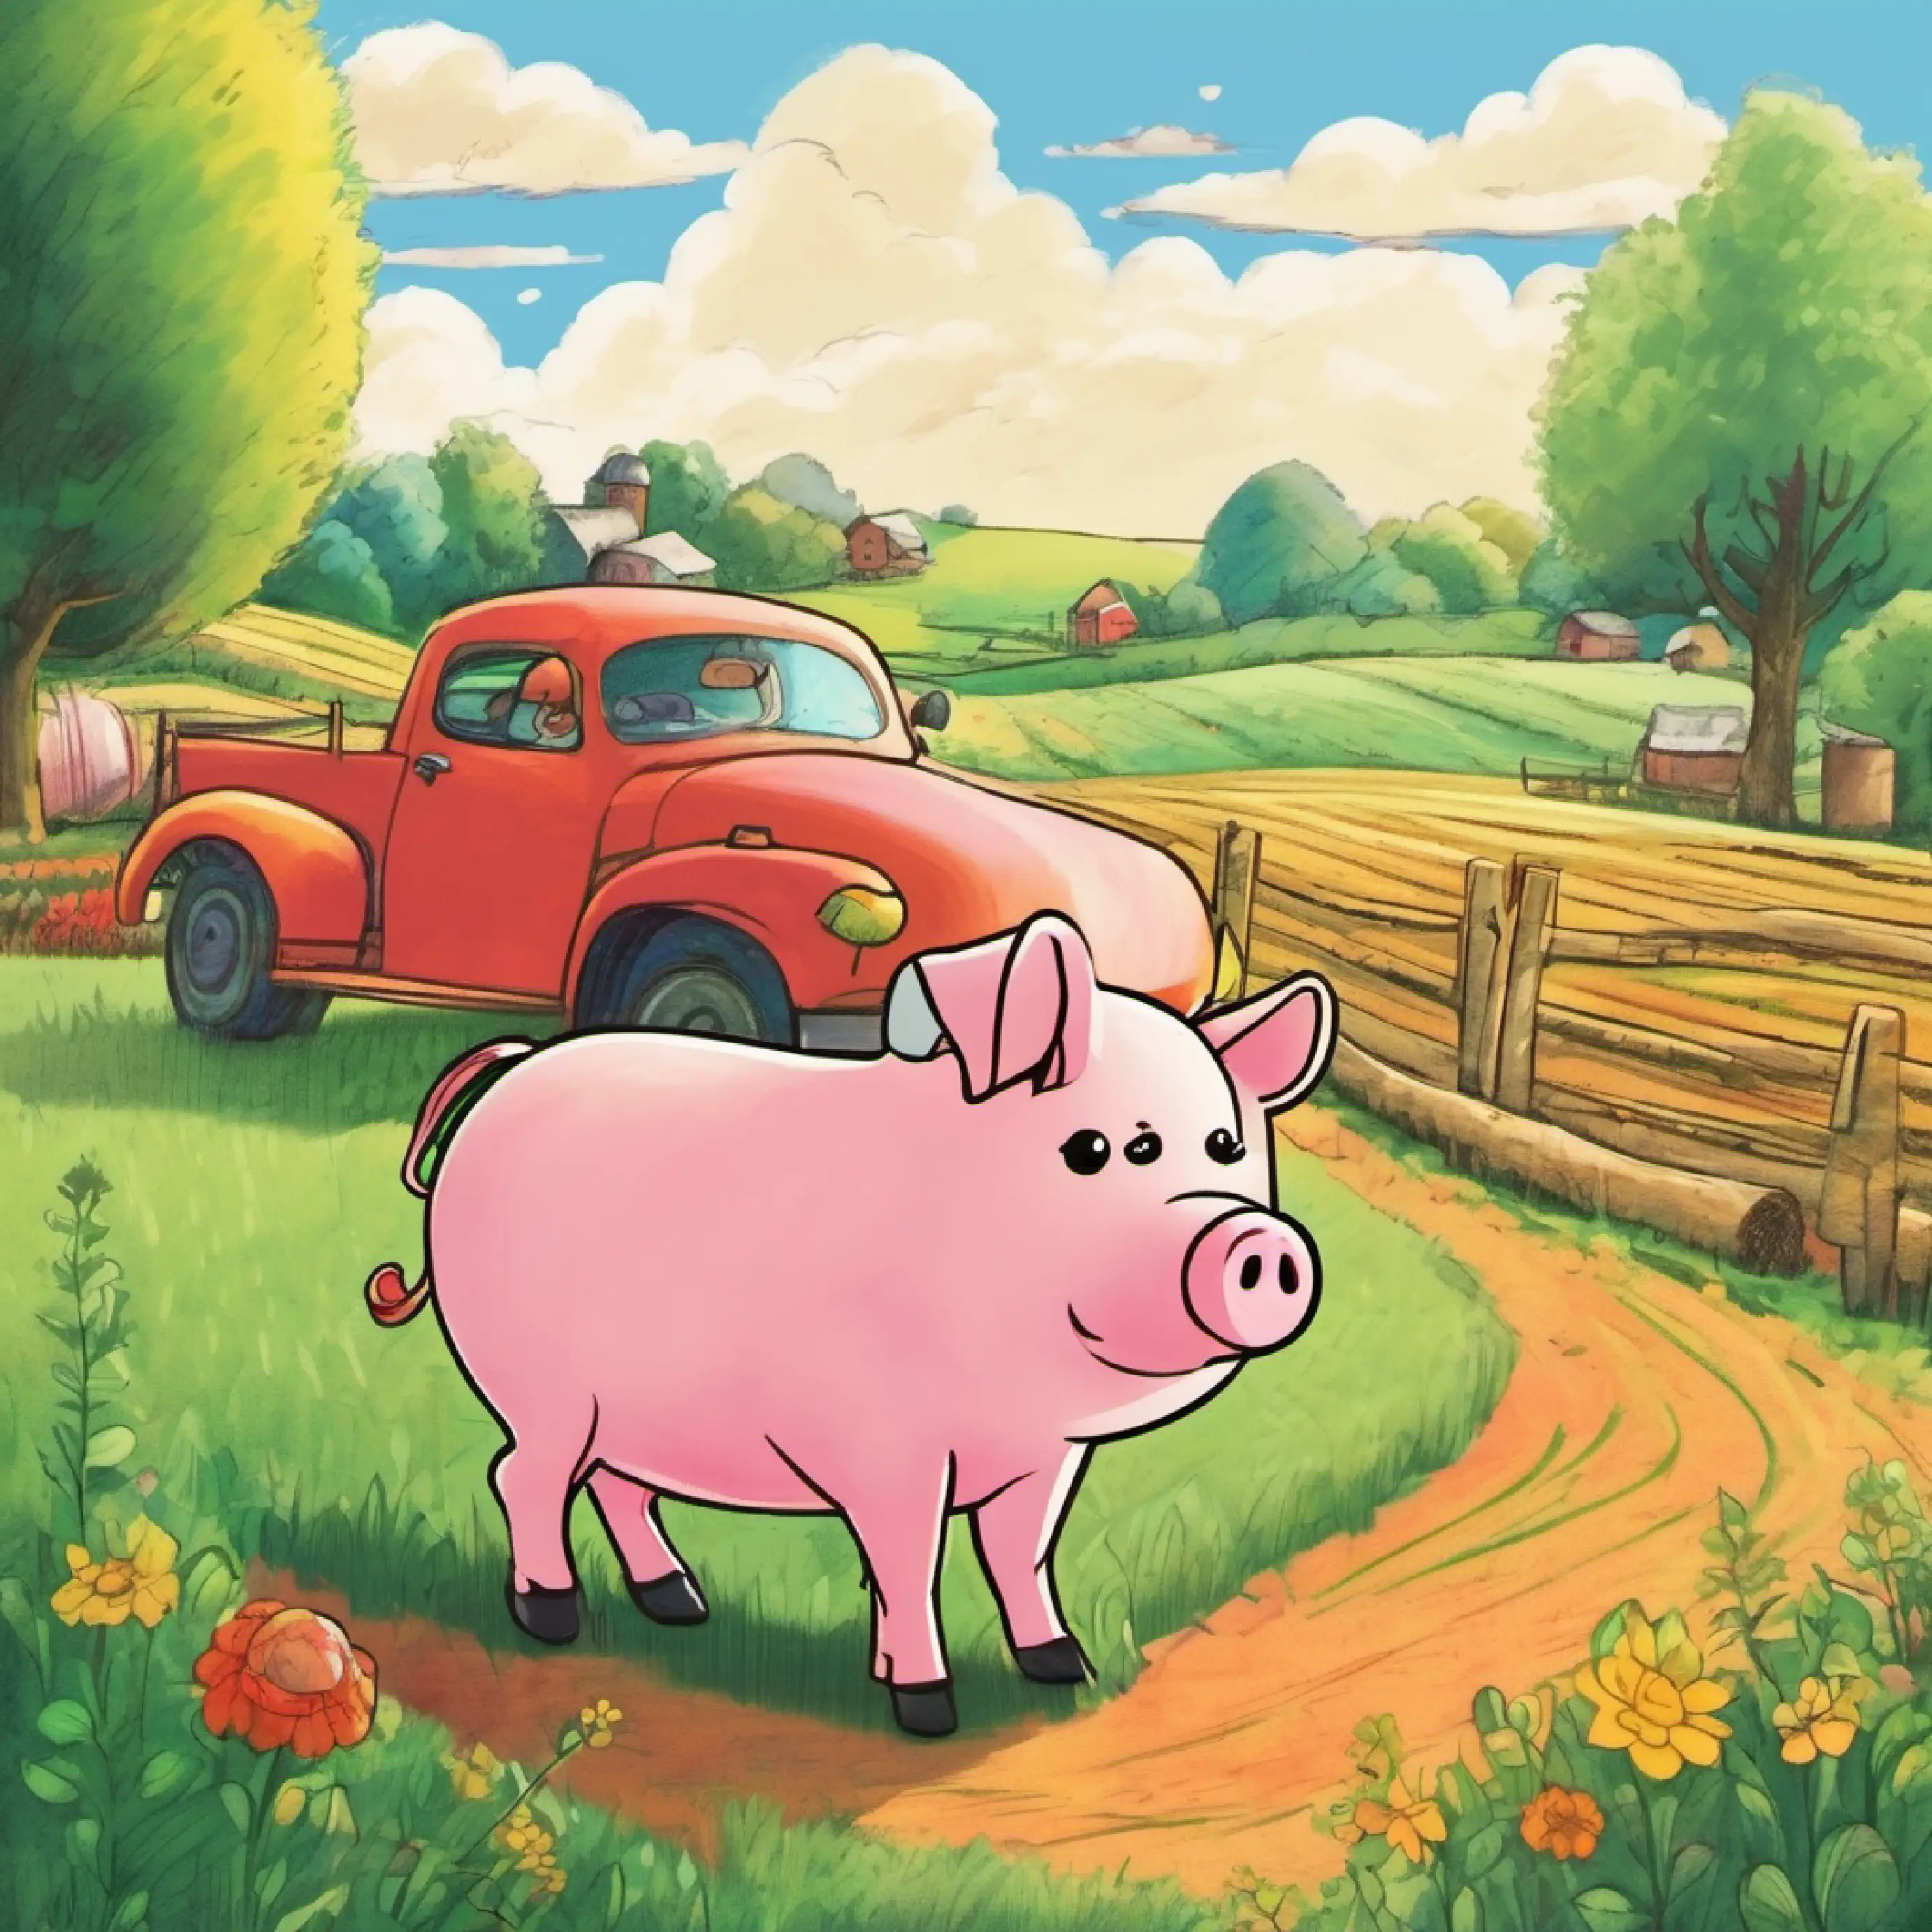 Introducing Piggy on the farm.